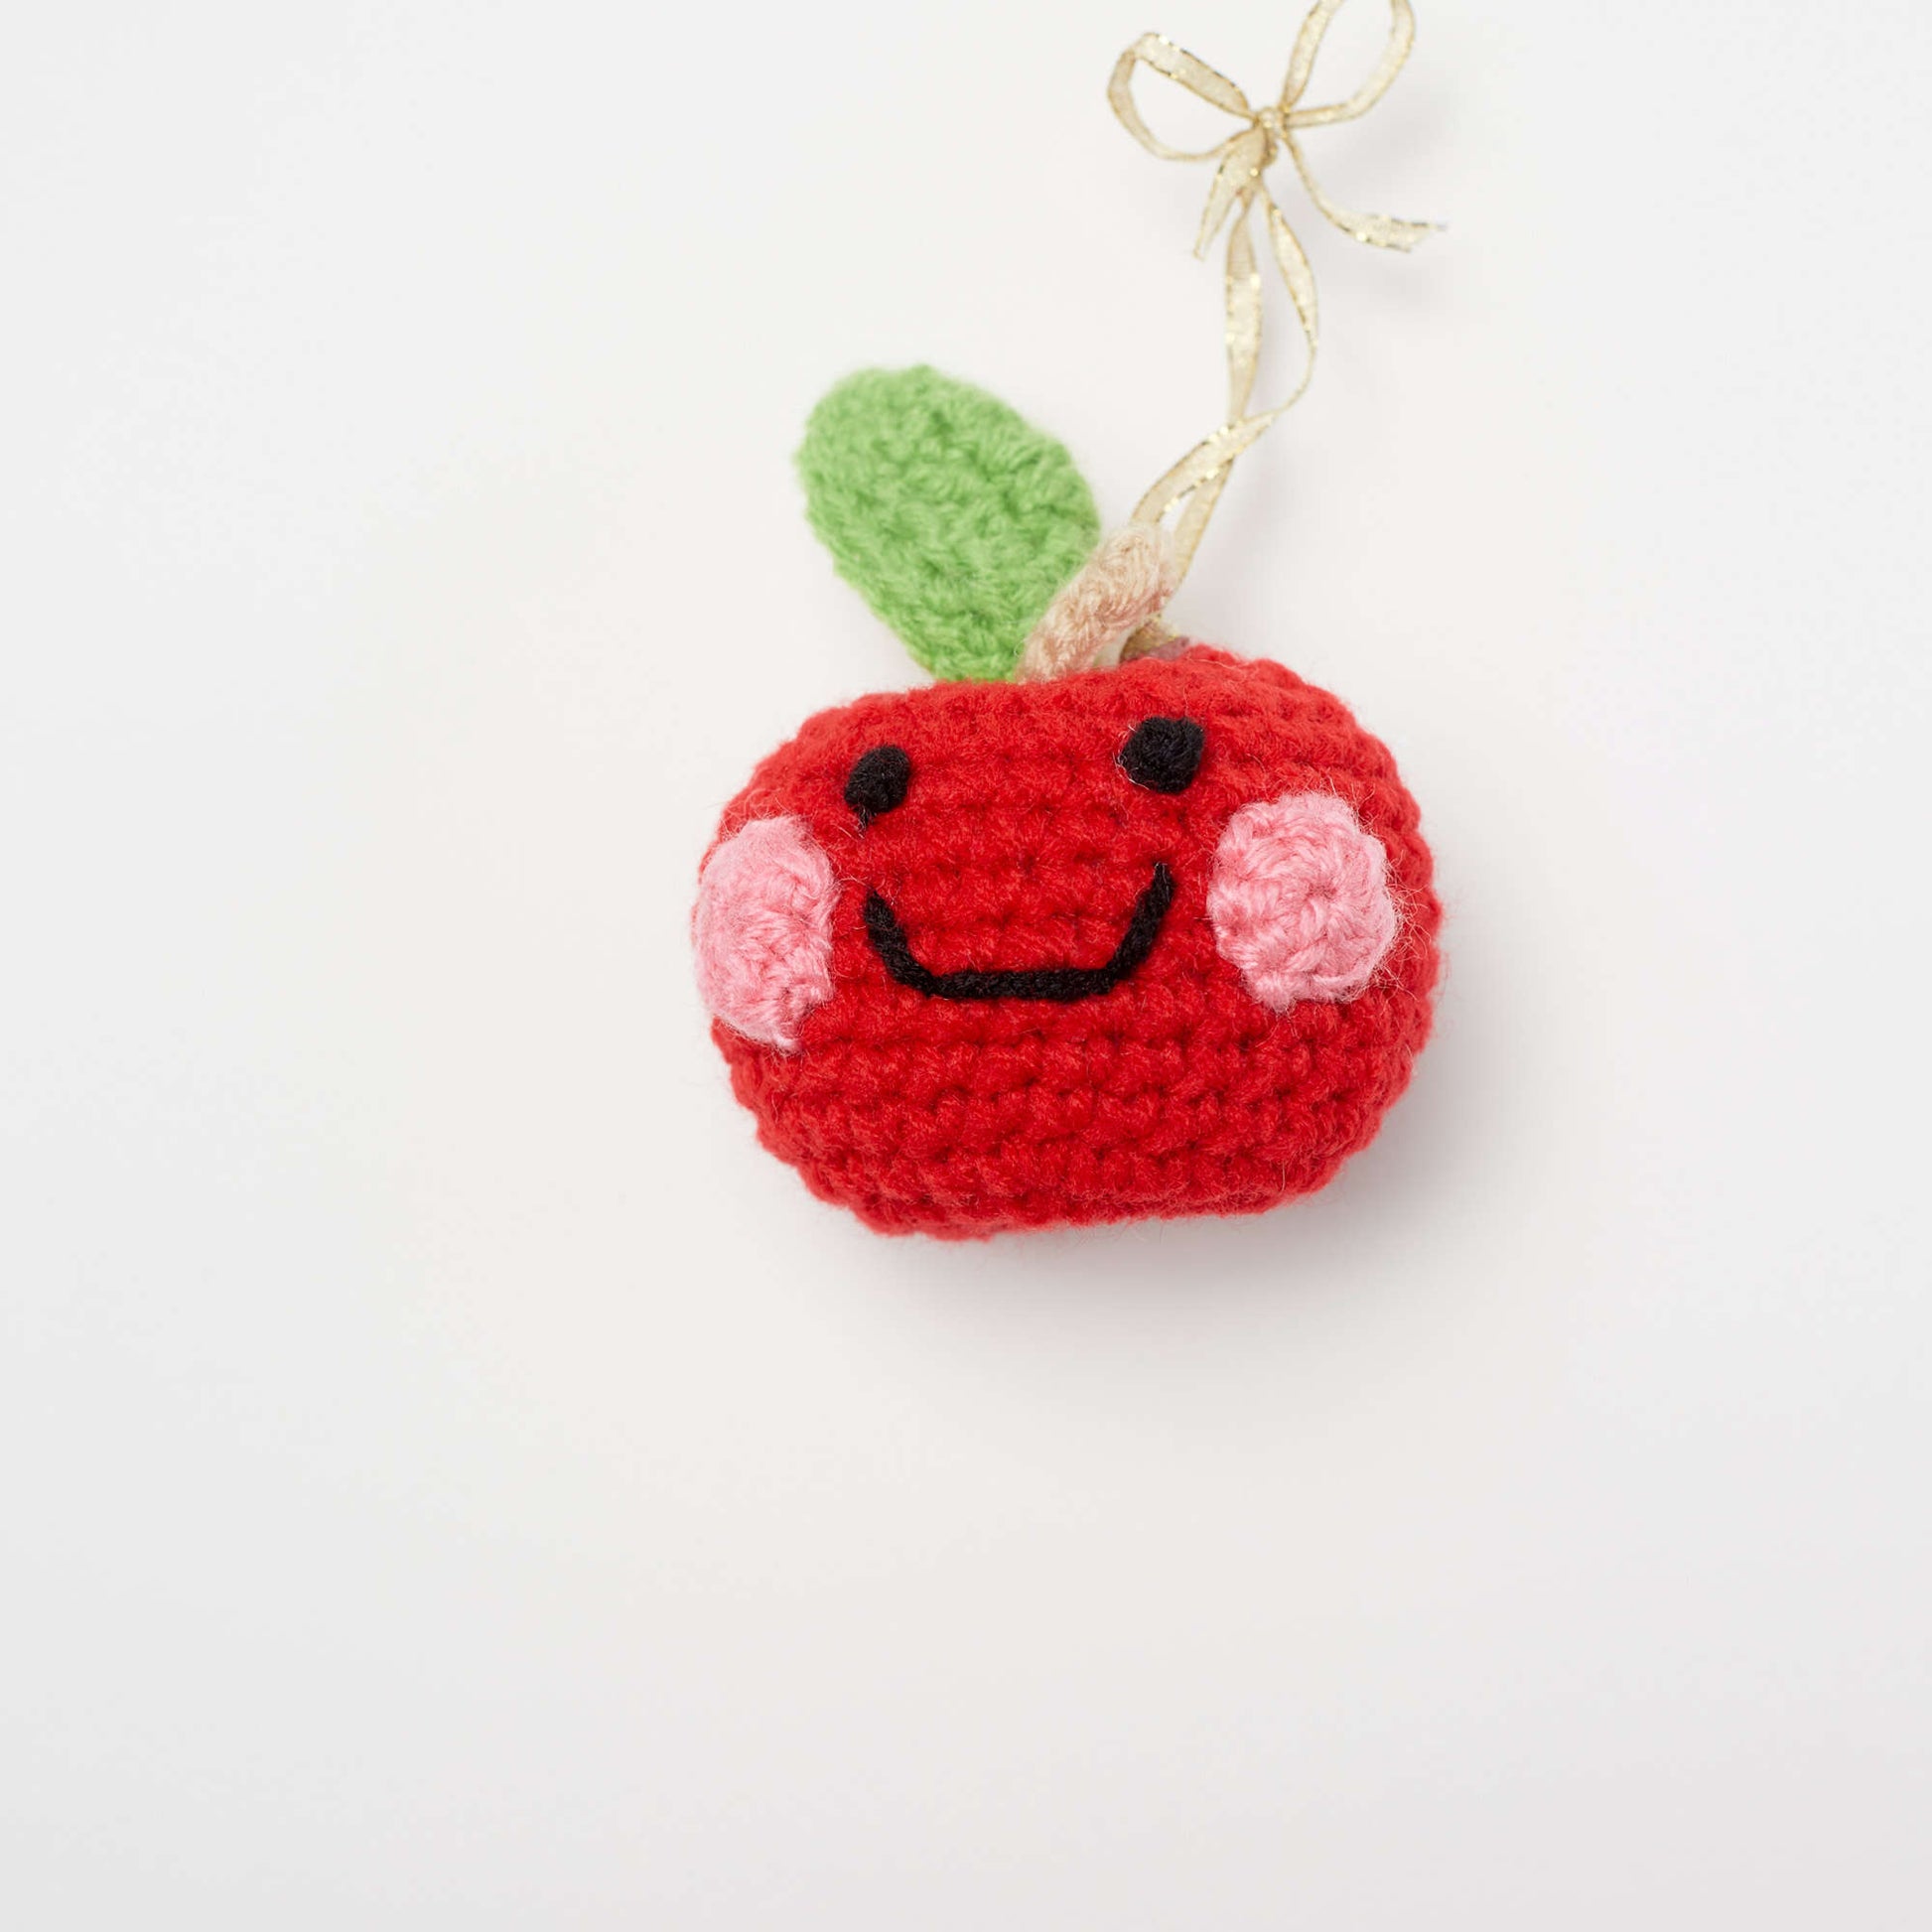 Free Red Heart Cheeky Apple Ornament Crochet Pattern